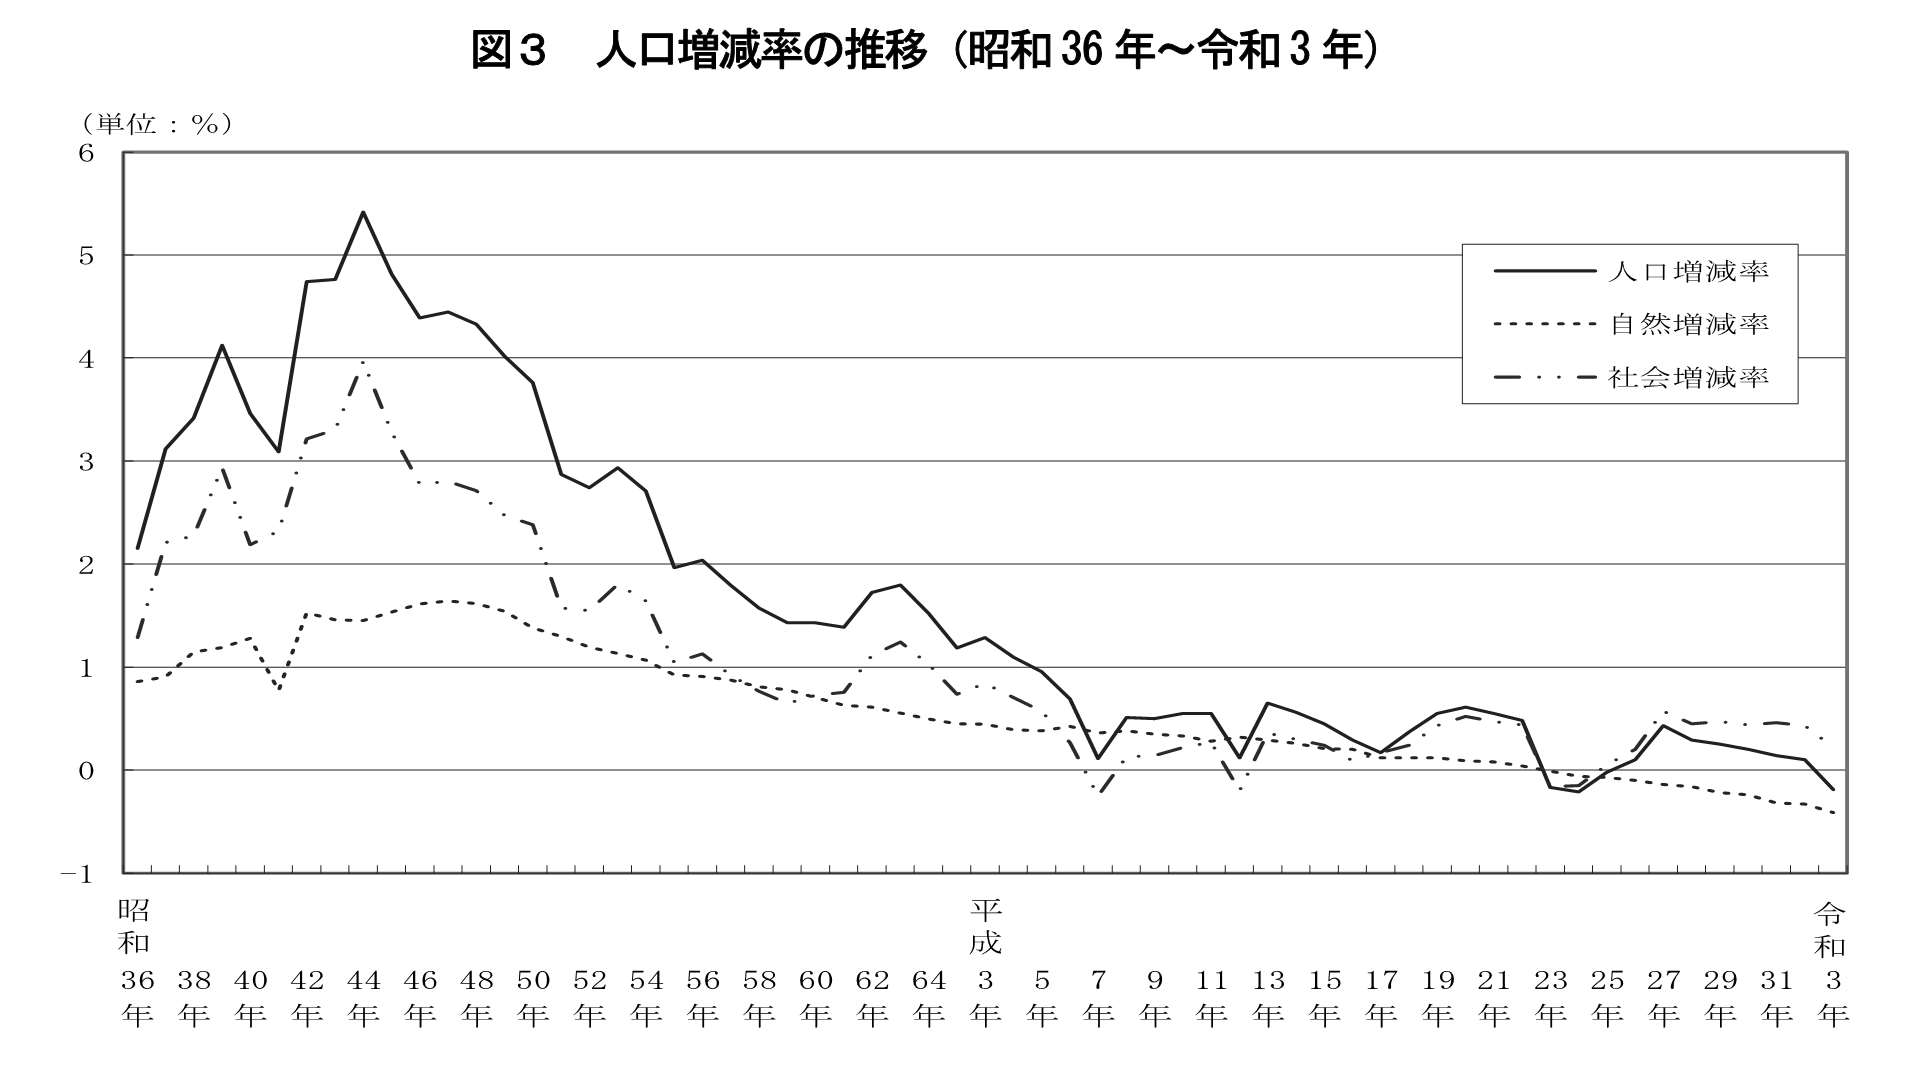 図3.人口増減率の推移（昭和36年～令和3年）